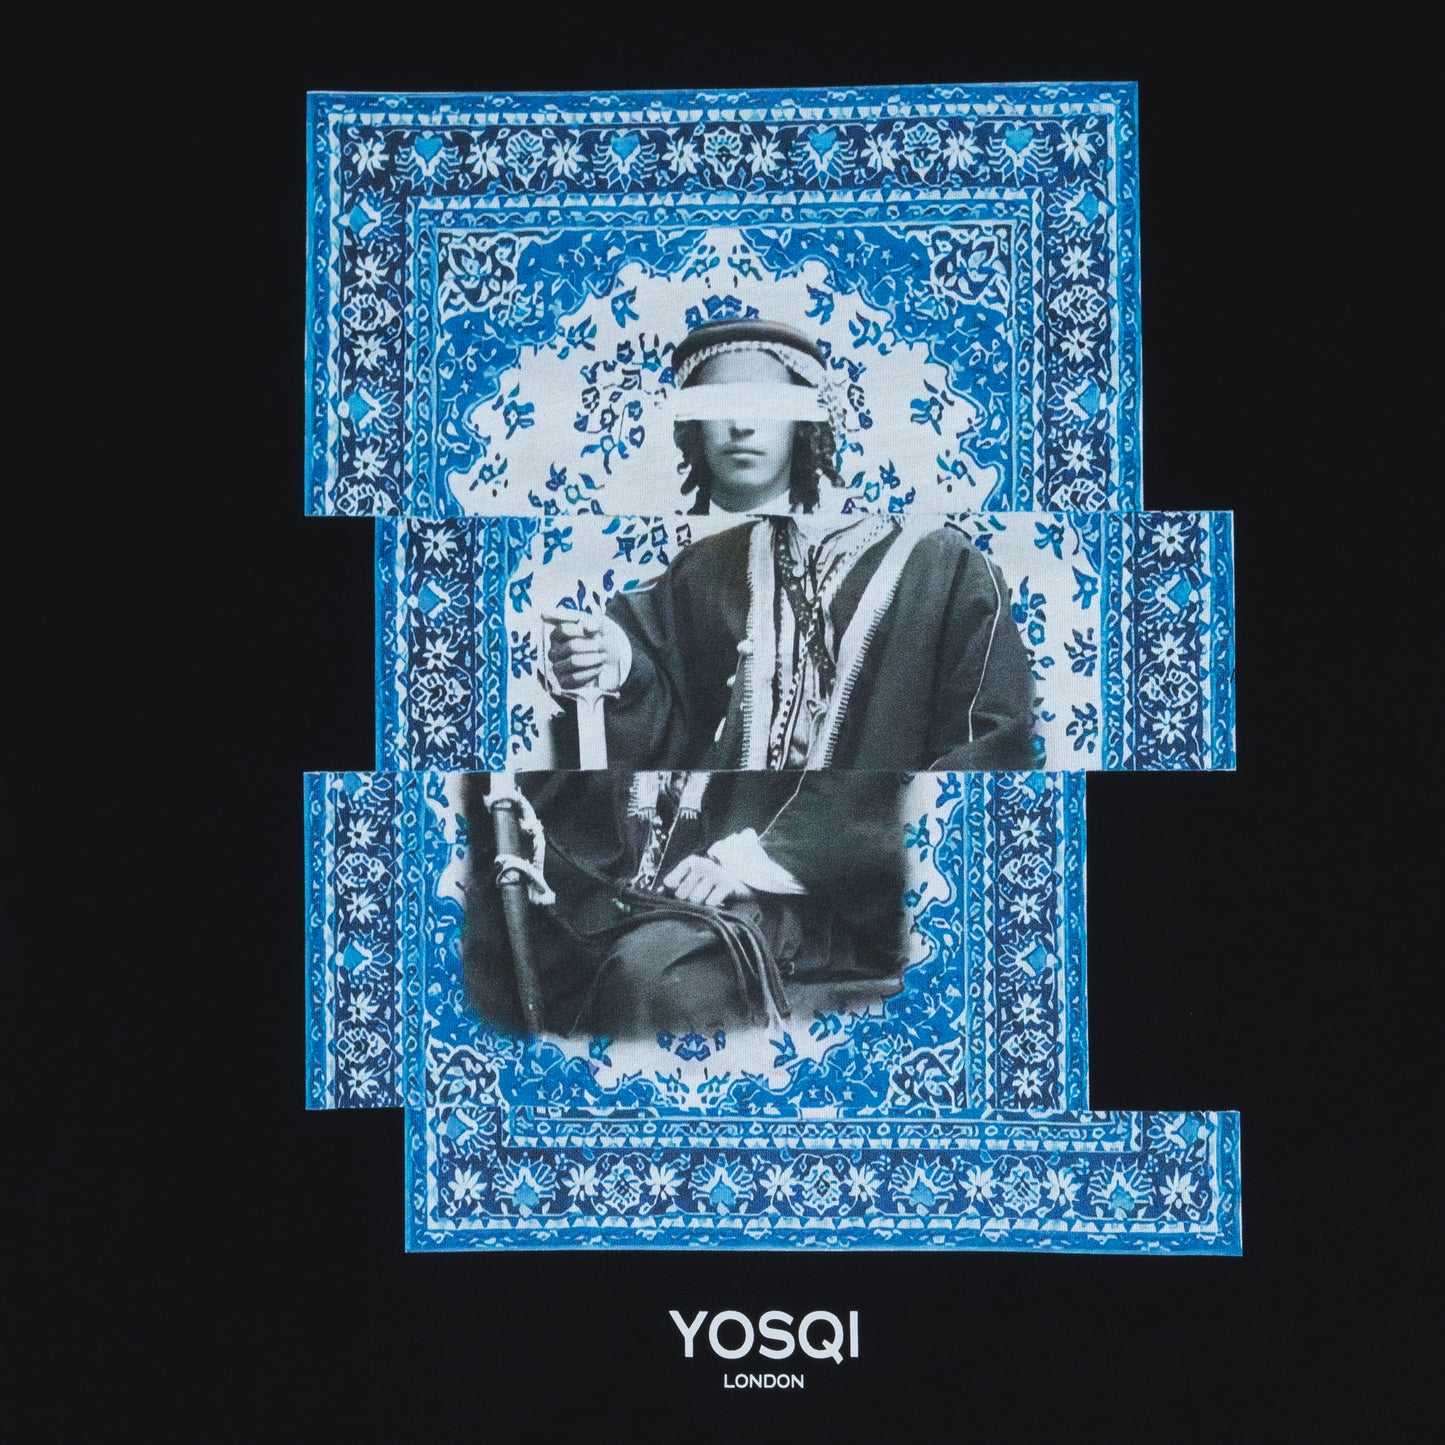 Yosqi 'Blue Arab Art' tee